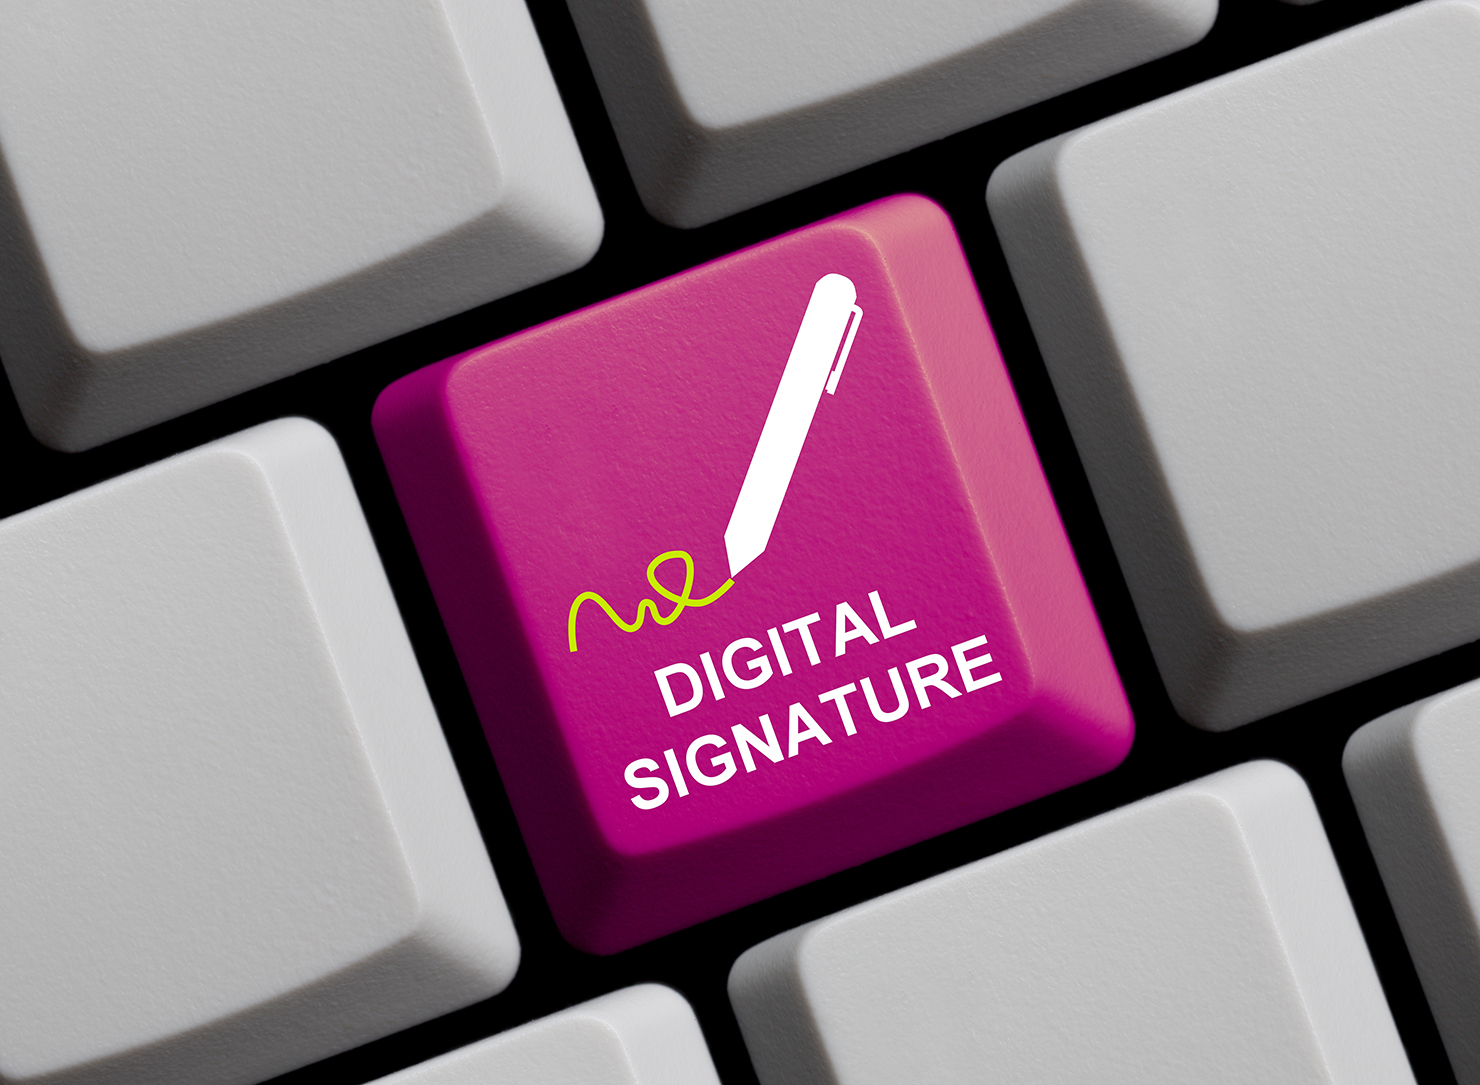 Digital Signature Market 2018